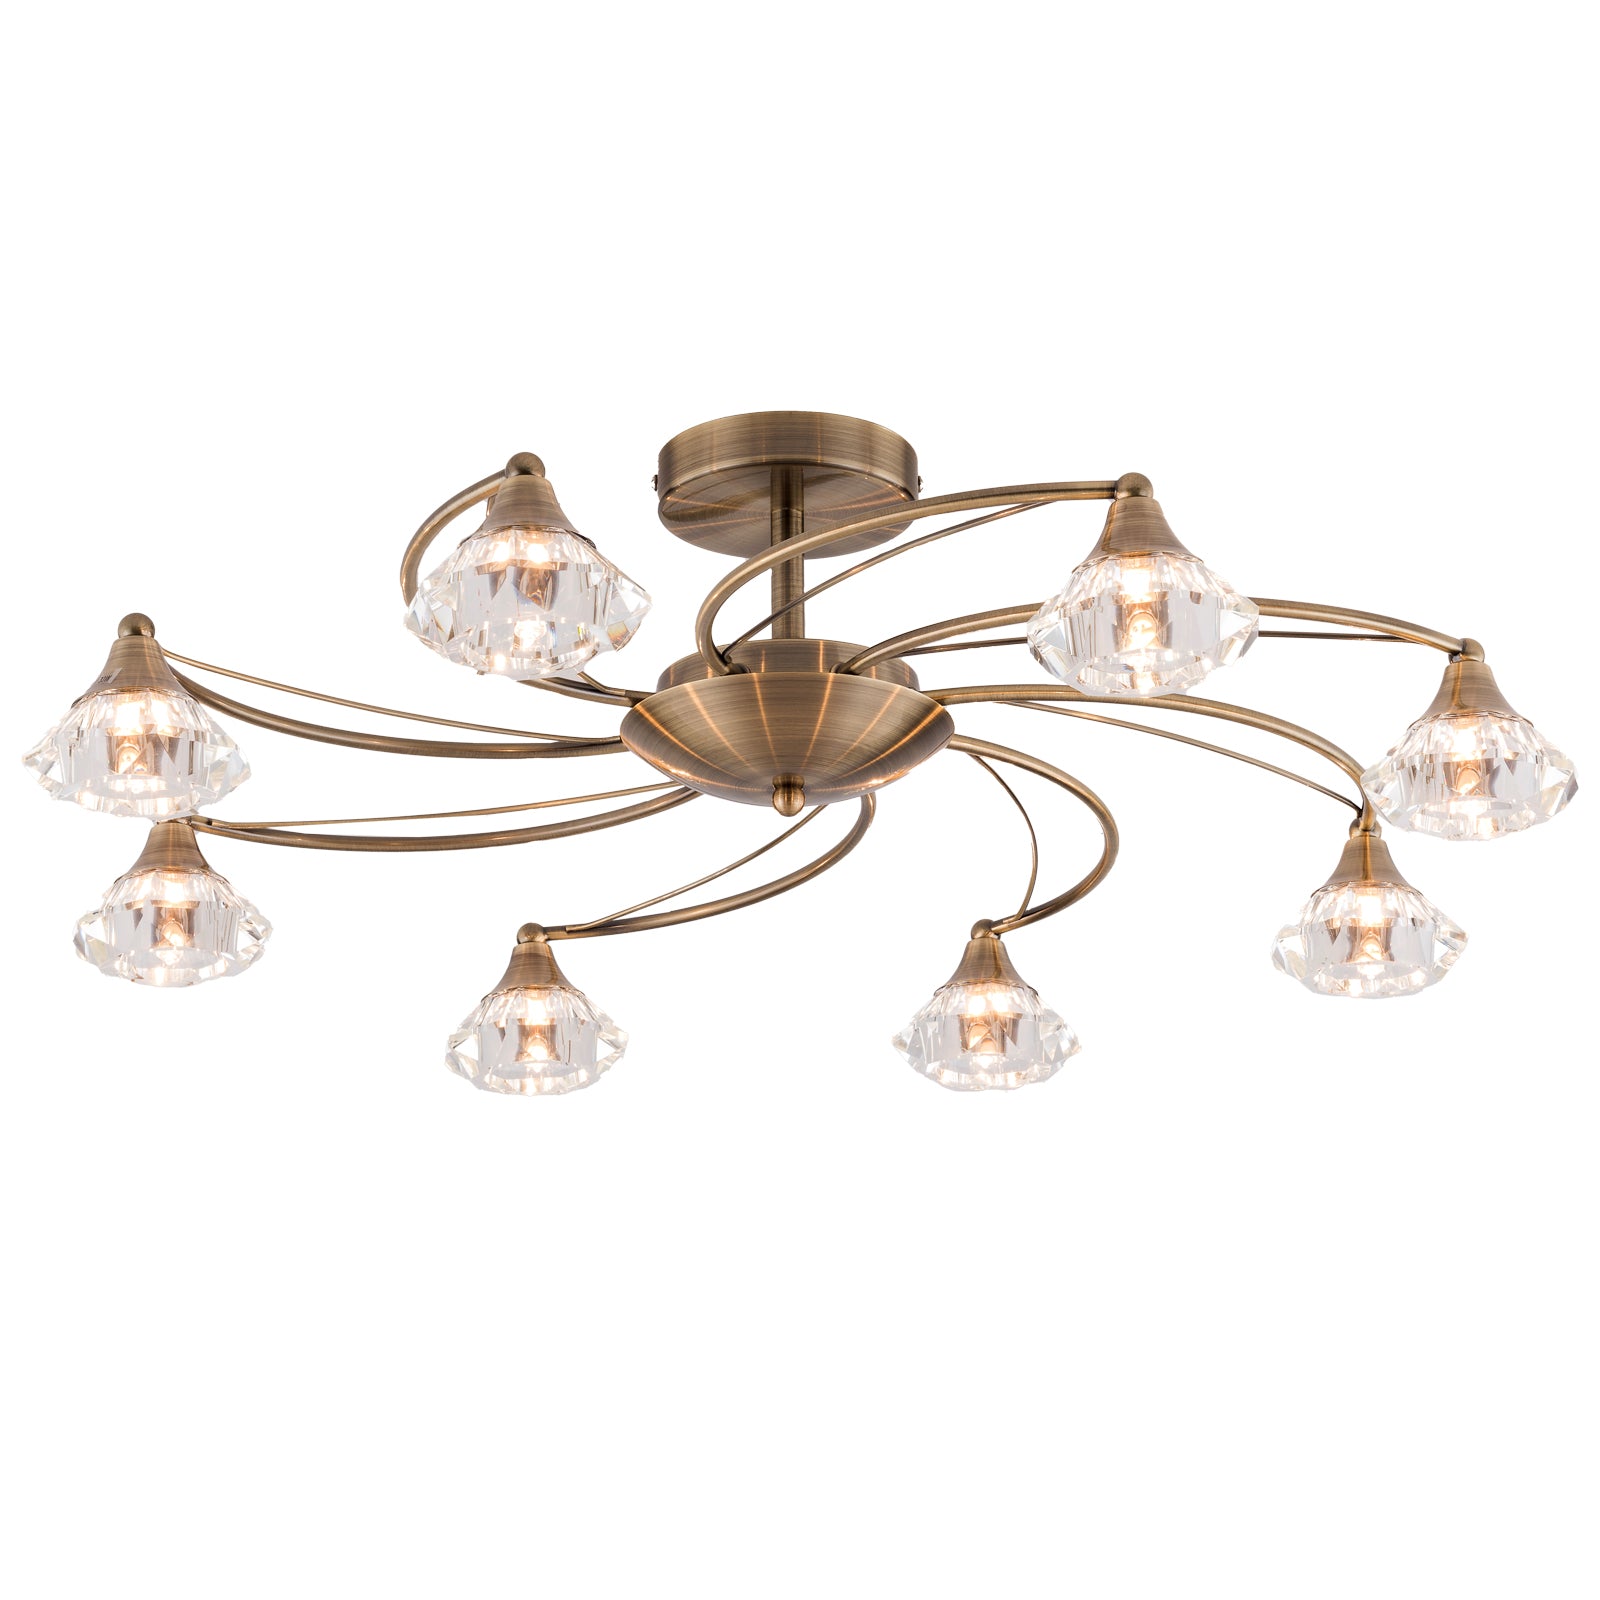 8 Light Semi-Flush Ceiling Light, Antique Brass Finish, Clear Glass Shades